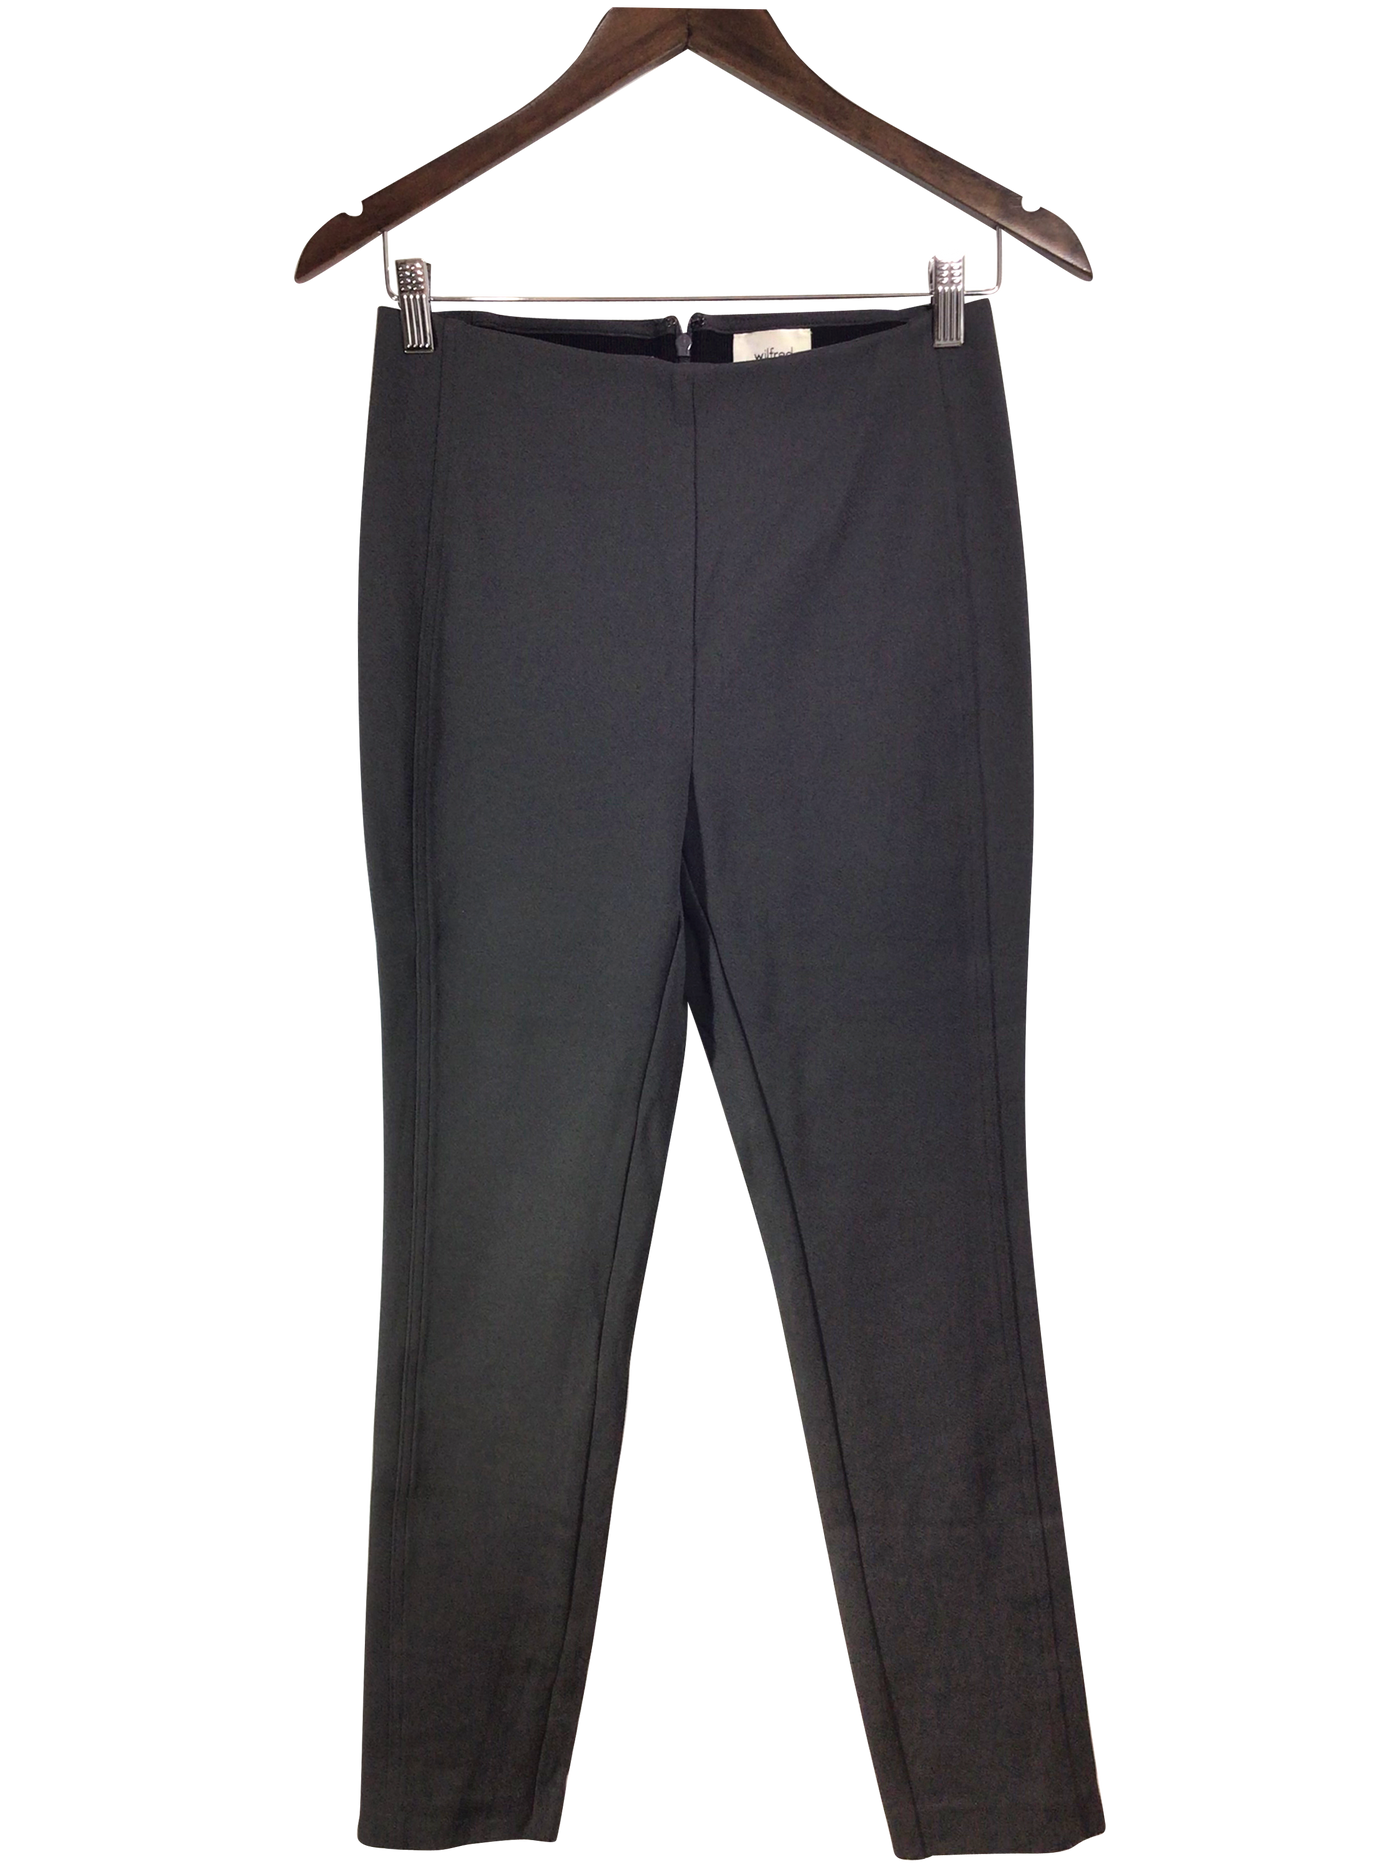 WILFRED Pant Regular fit in Gray - Size 6 | 37.5 $ KOOP